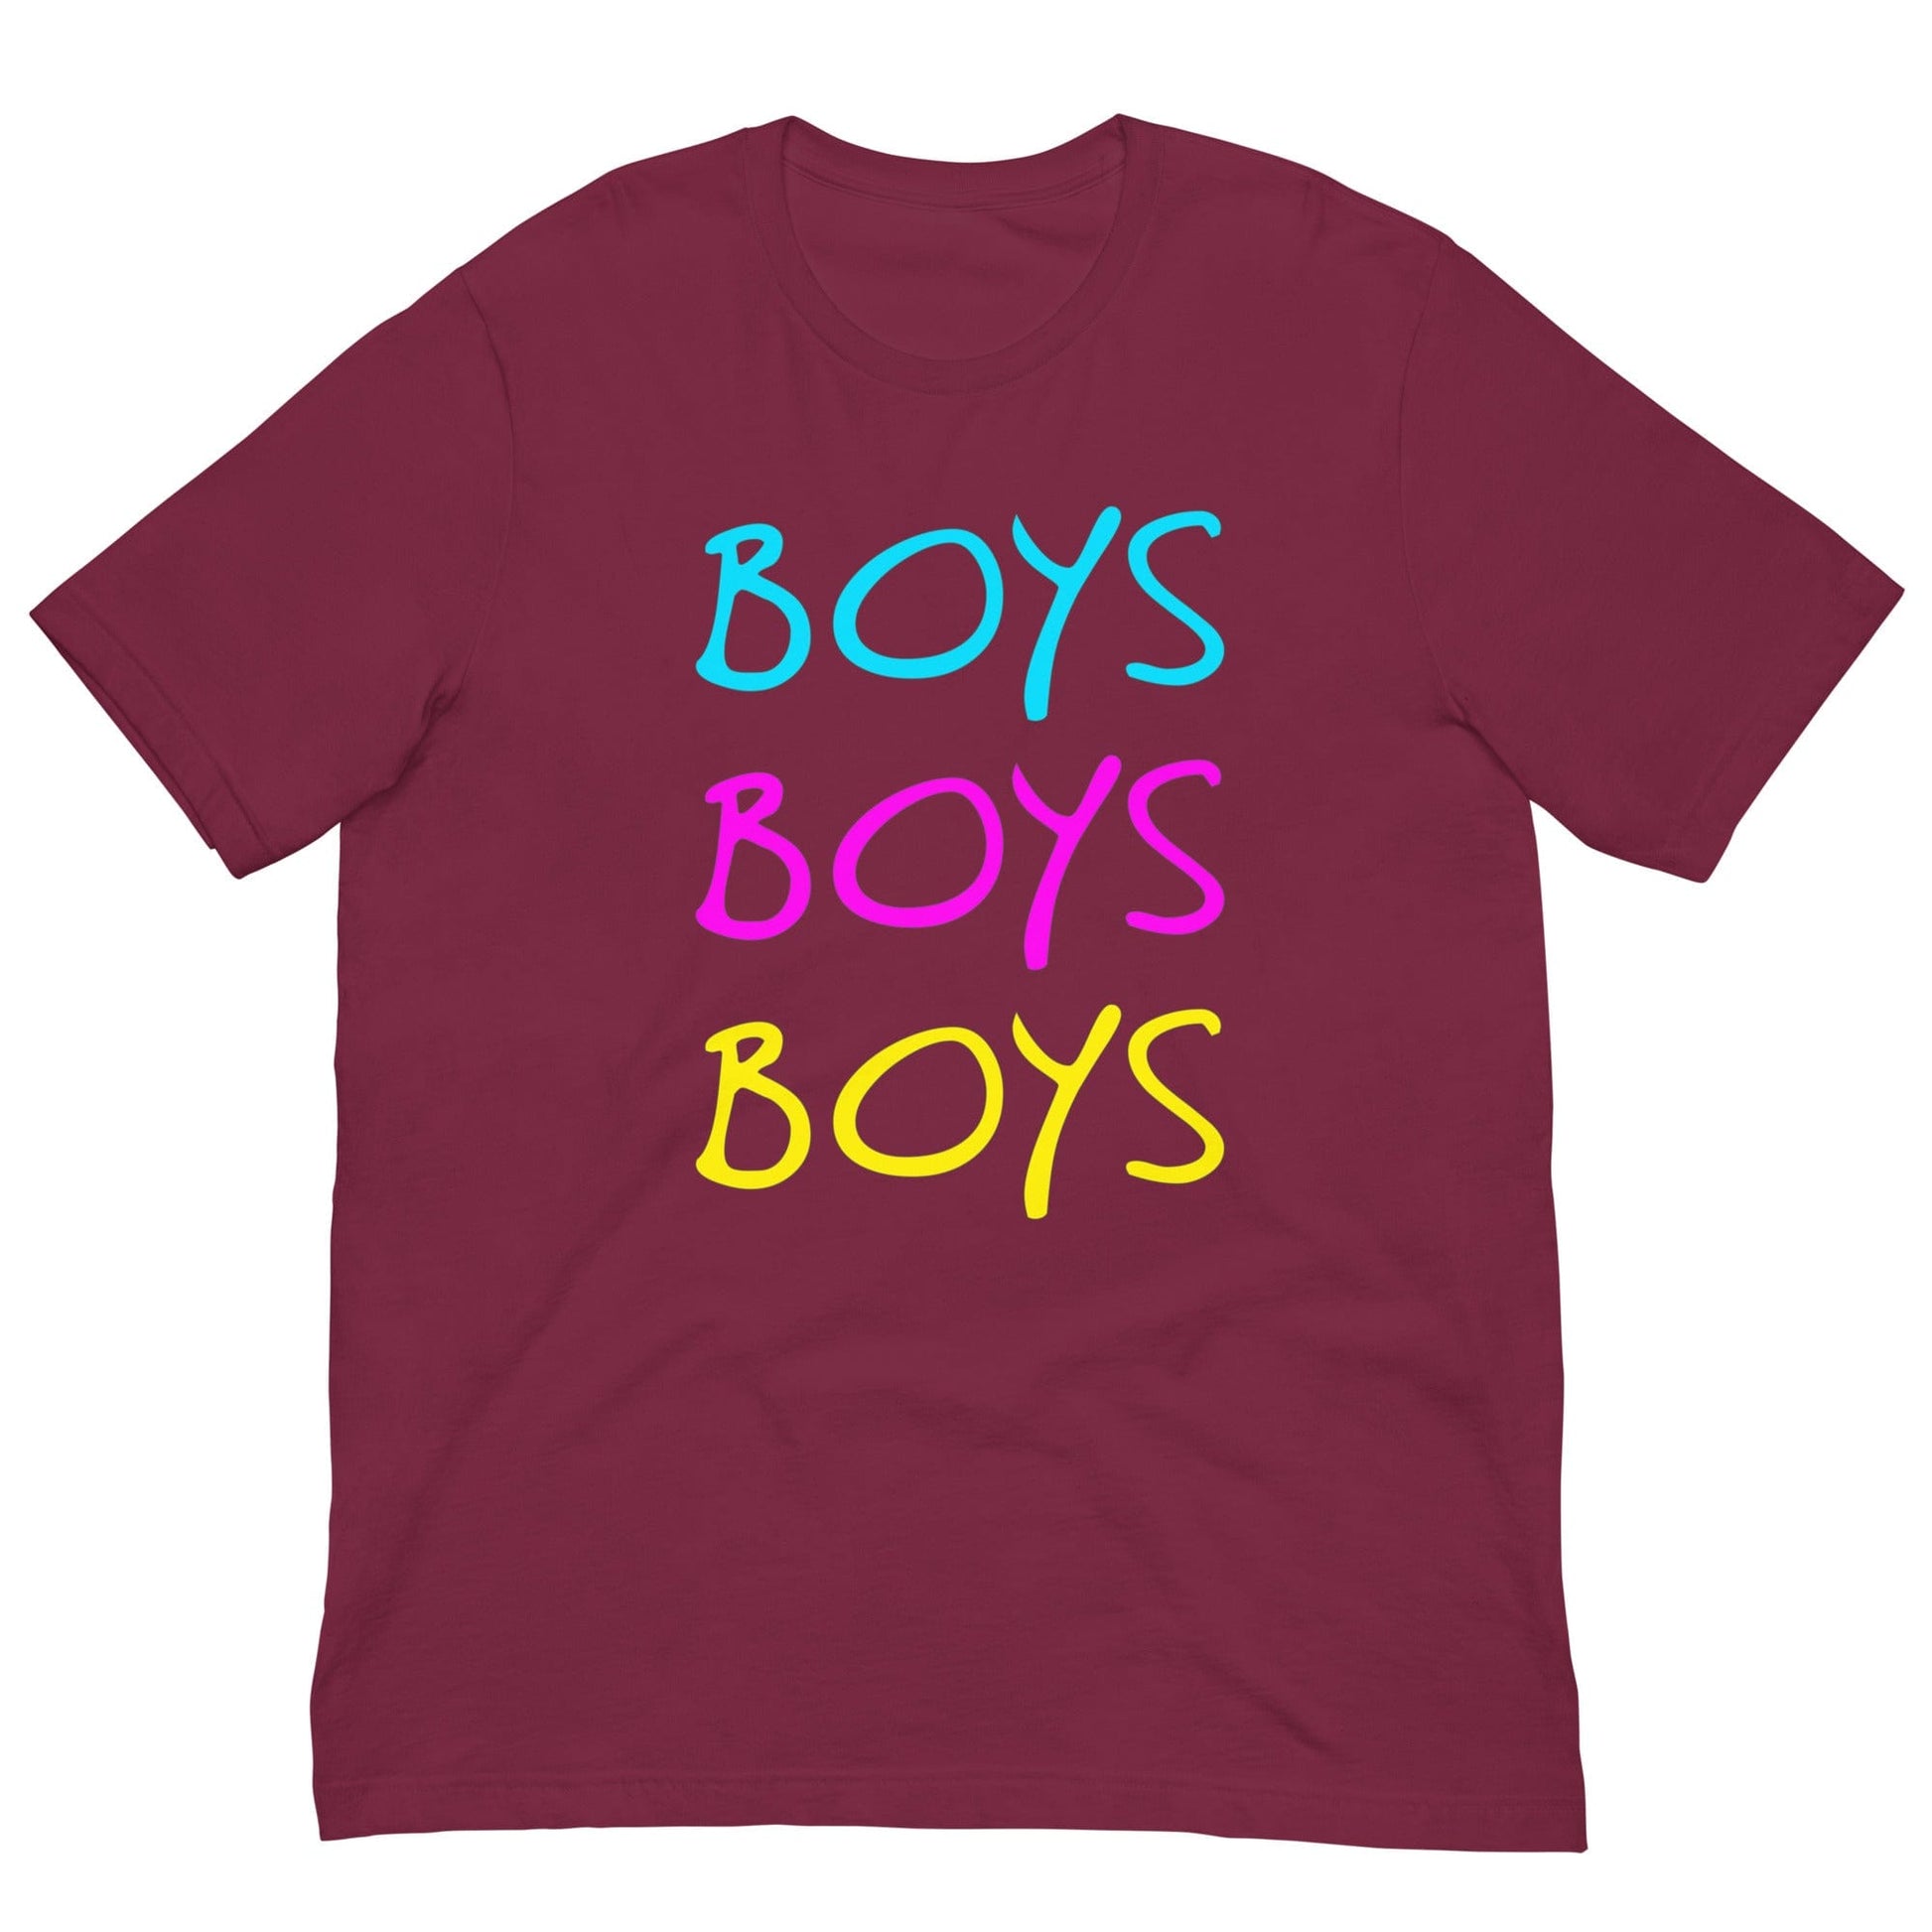 Boys, Boys, Boys LGBT Love T-shirt Maroon / XS